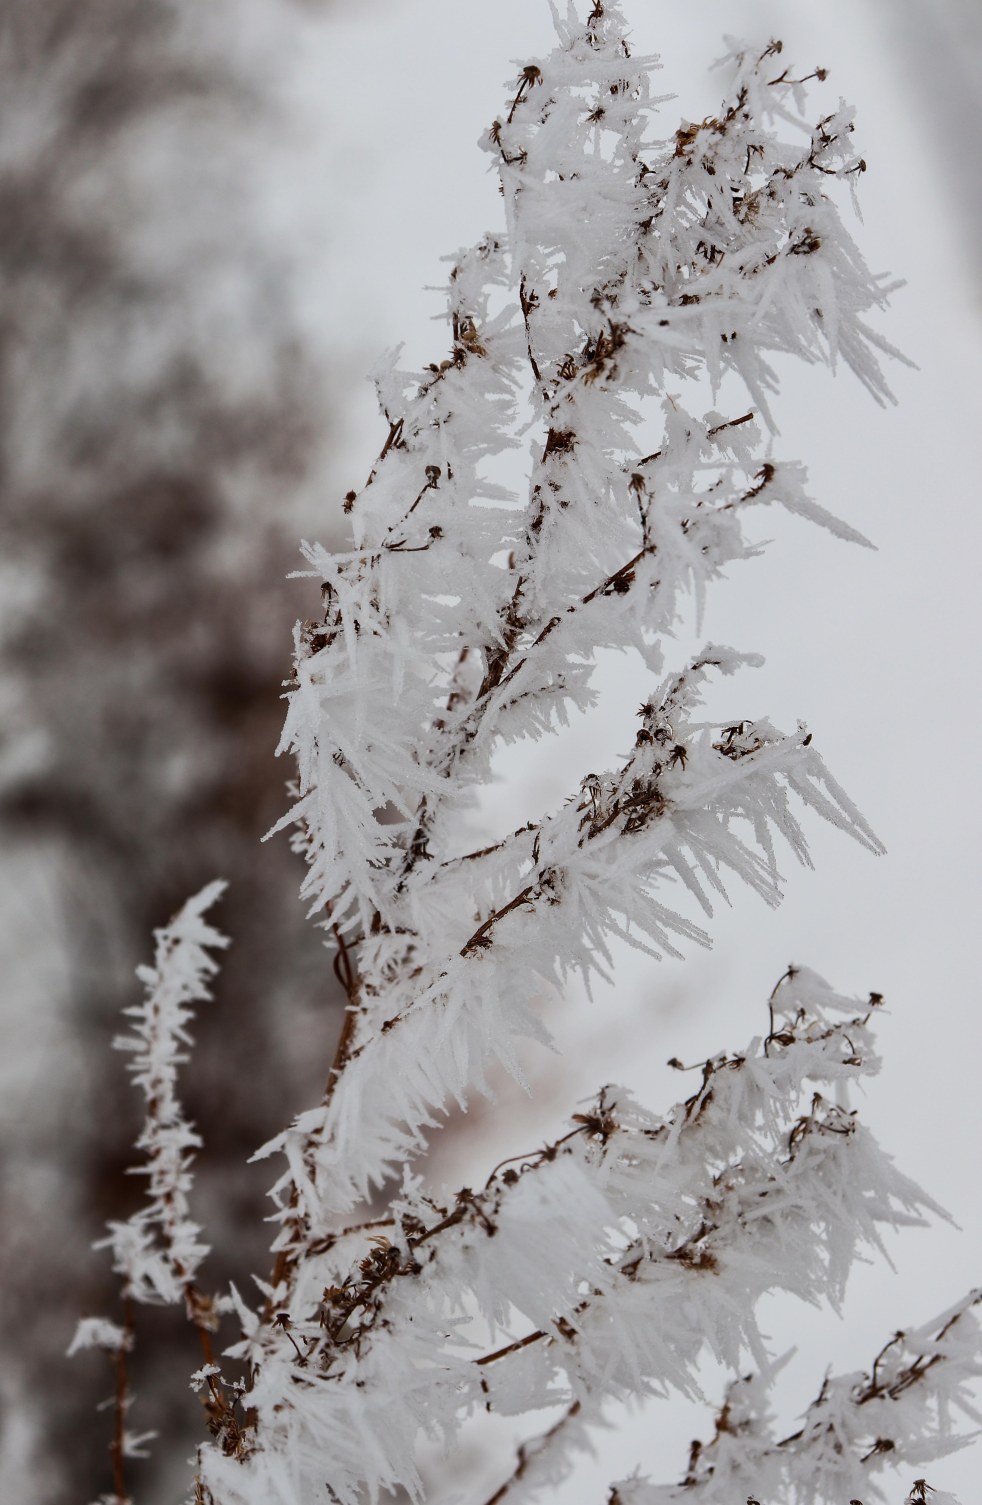 Shards of Frozen Fog Coating A Weed